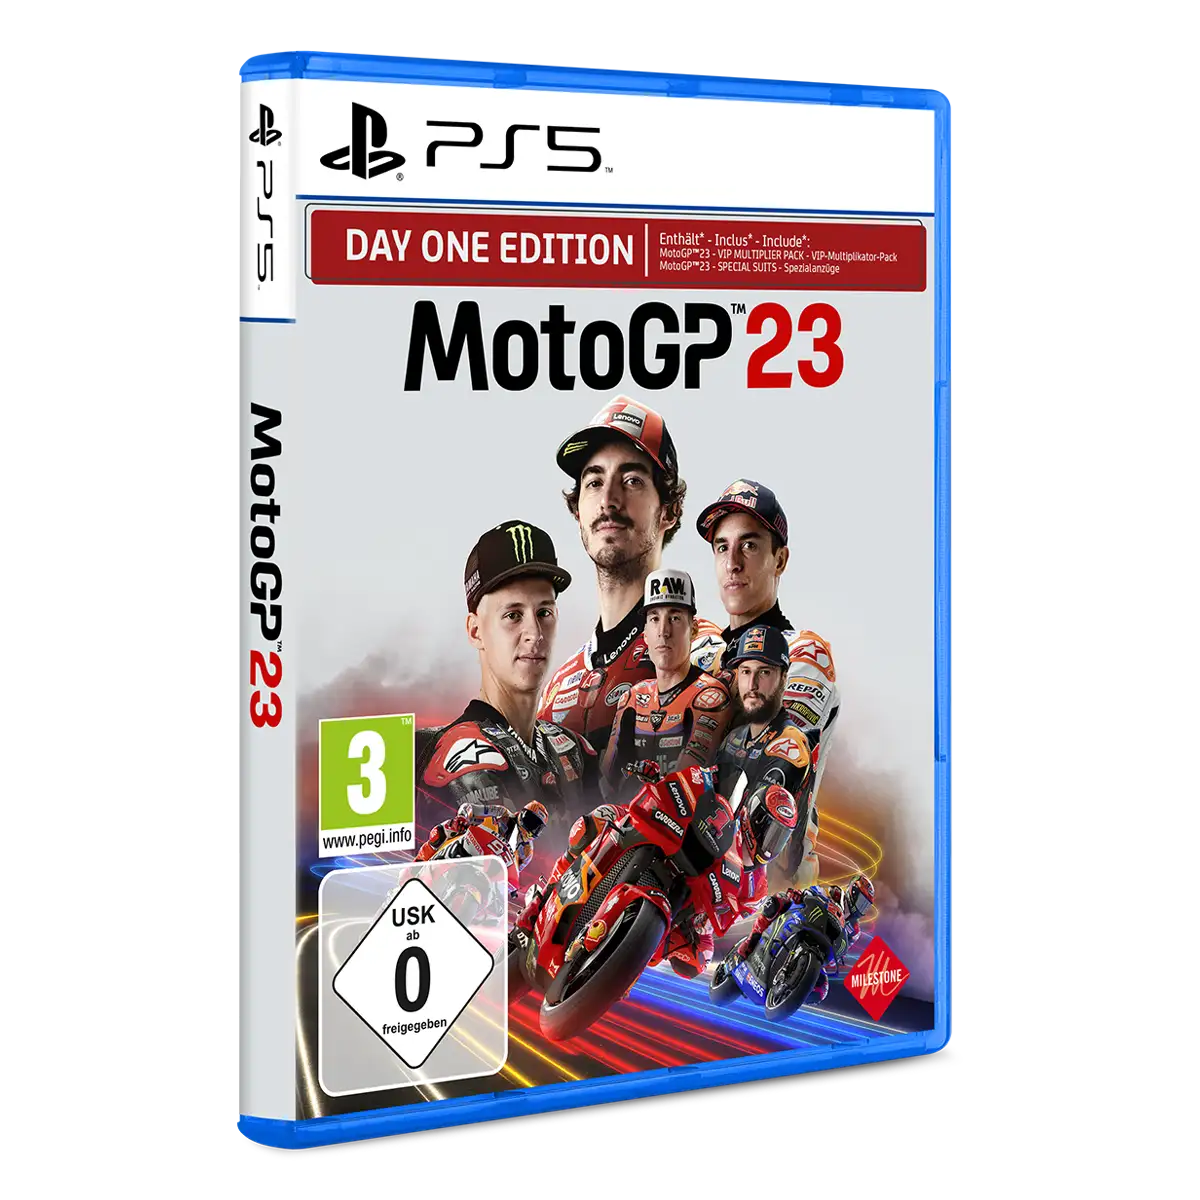 MOTOGP 23 PS5 - Catalogo  Mega-Mania A Loja dos Jogadores - Jogos,  Consolas, Playstation, Xbox, Nintendo